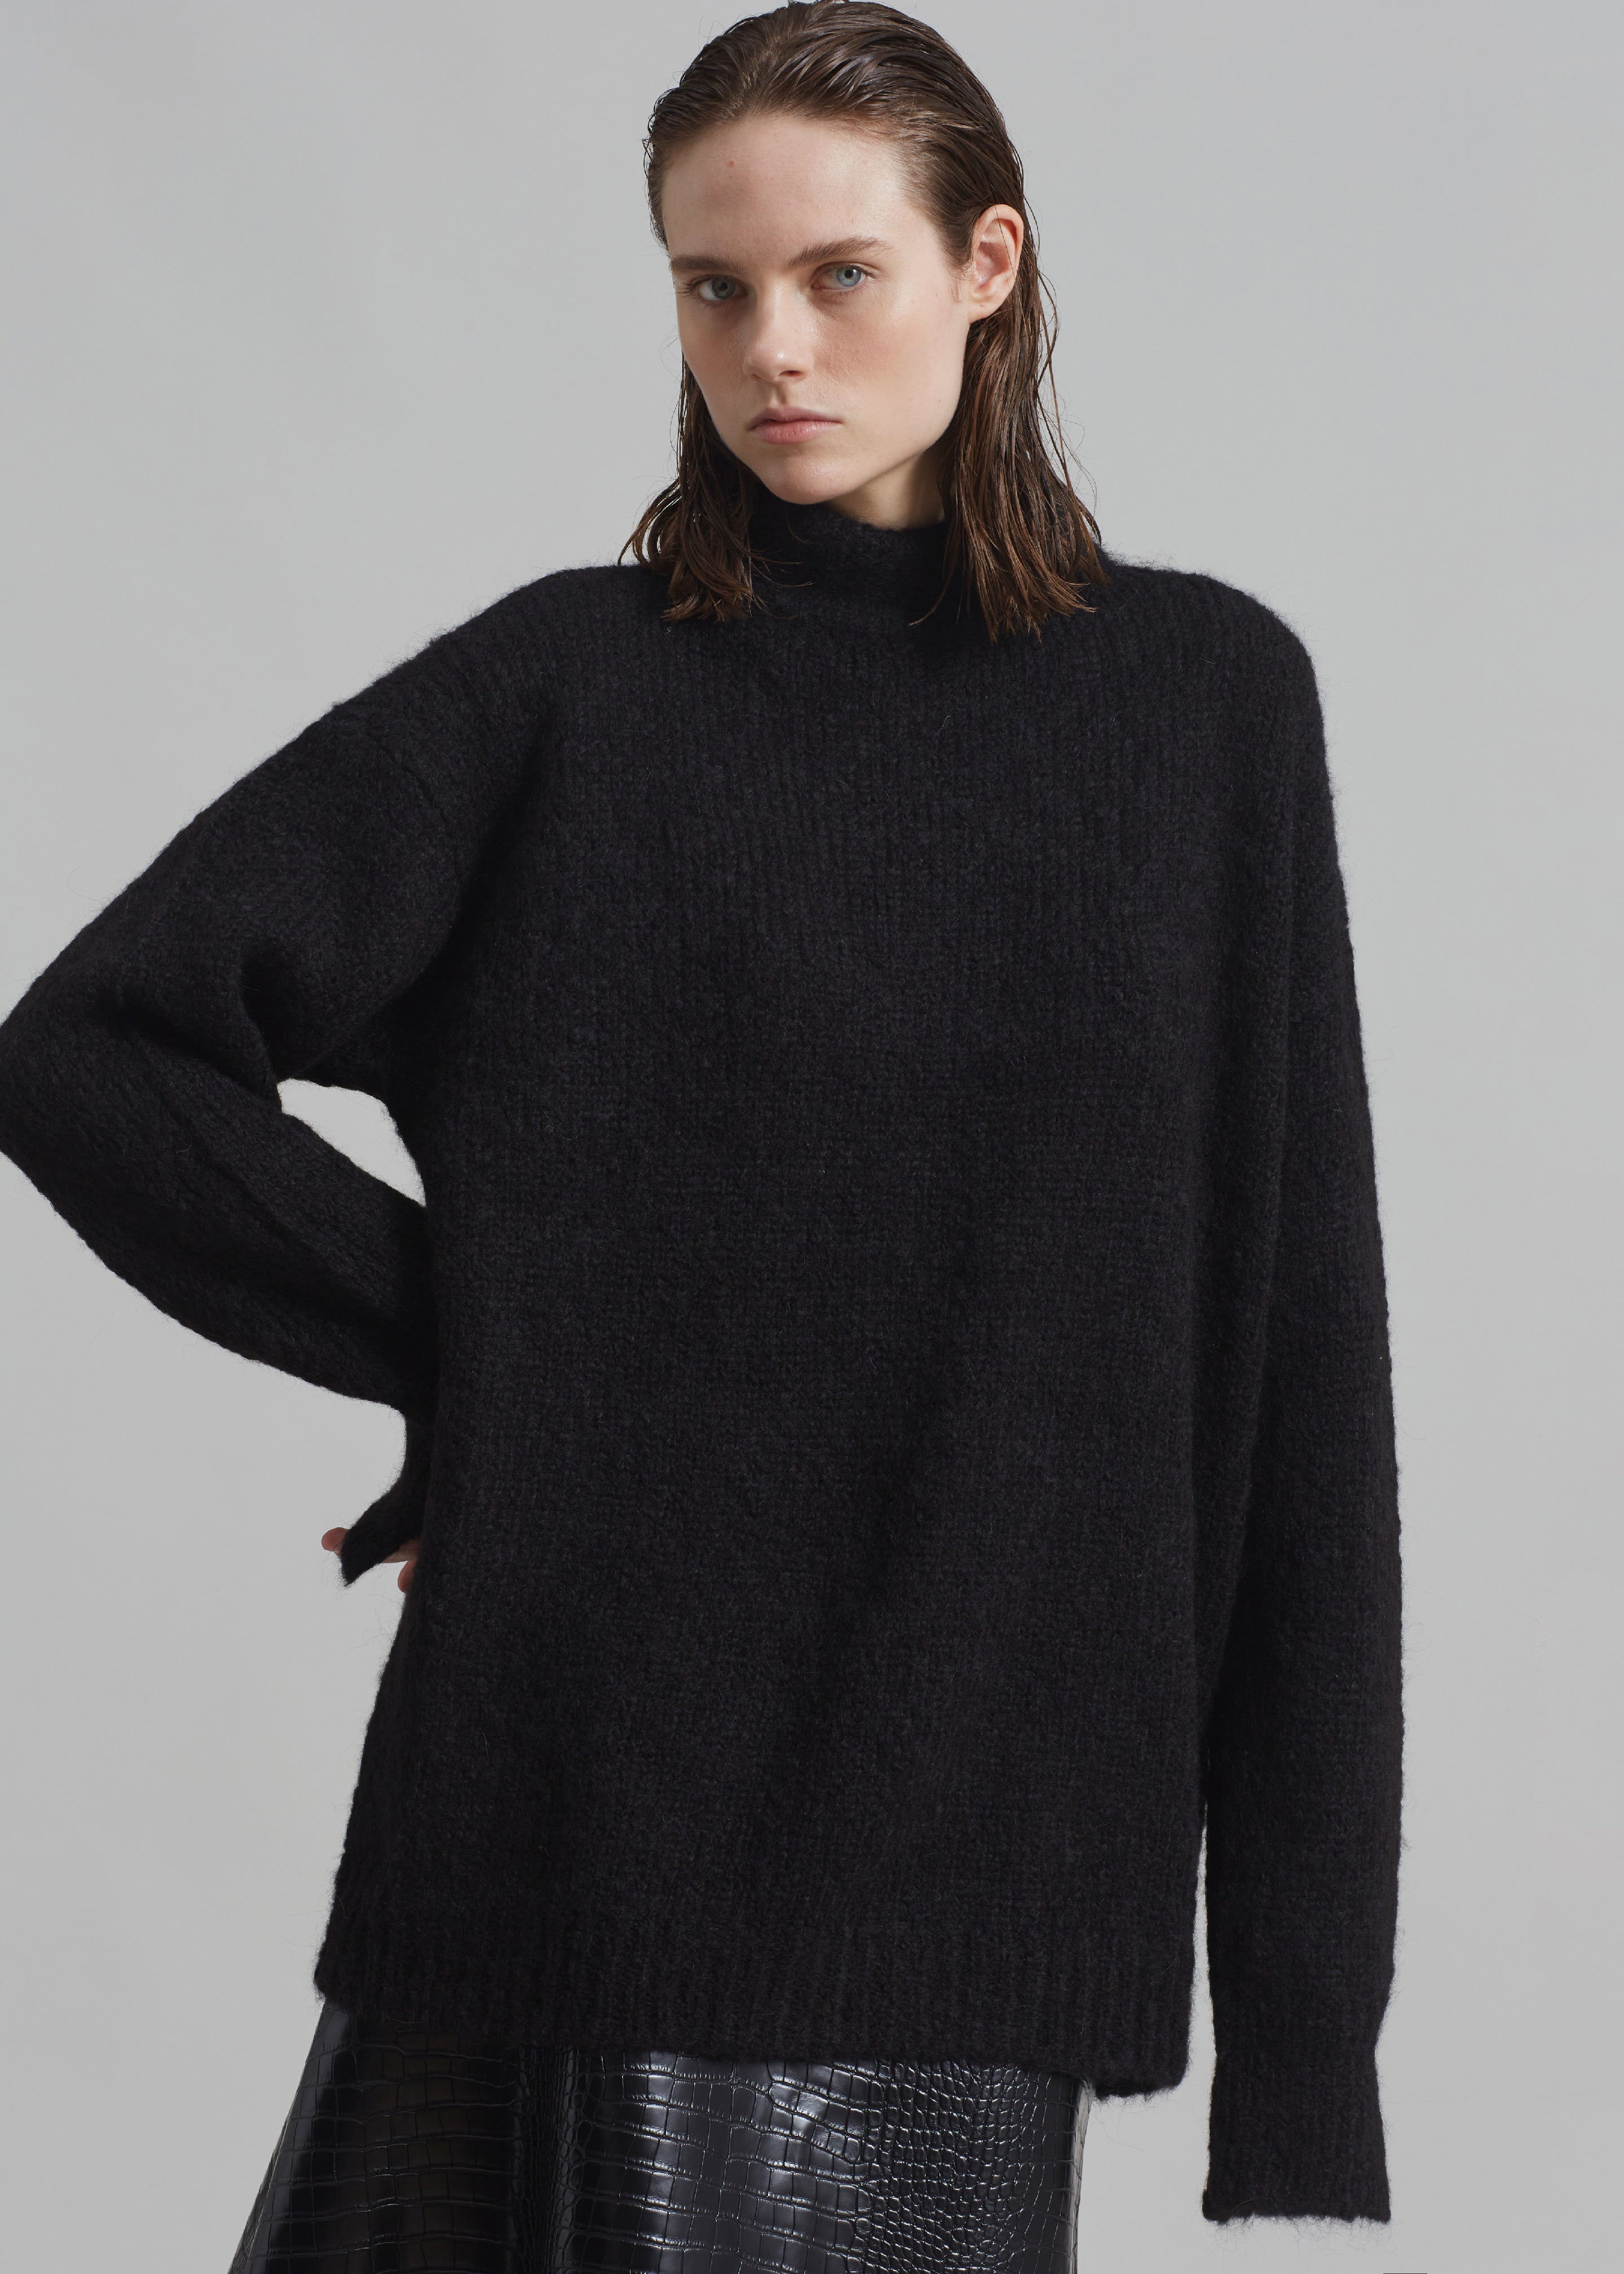 Róhe Mohair Wool Blend Sweater - Chocolate - 3